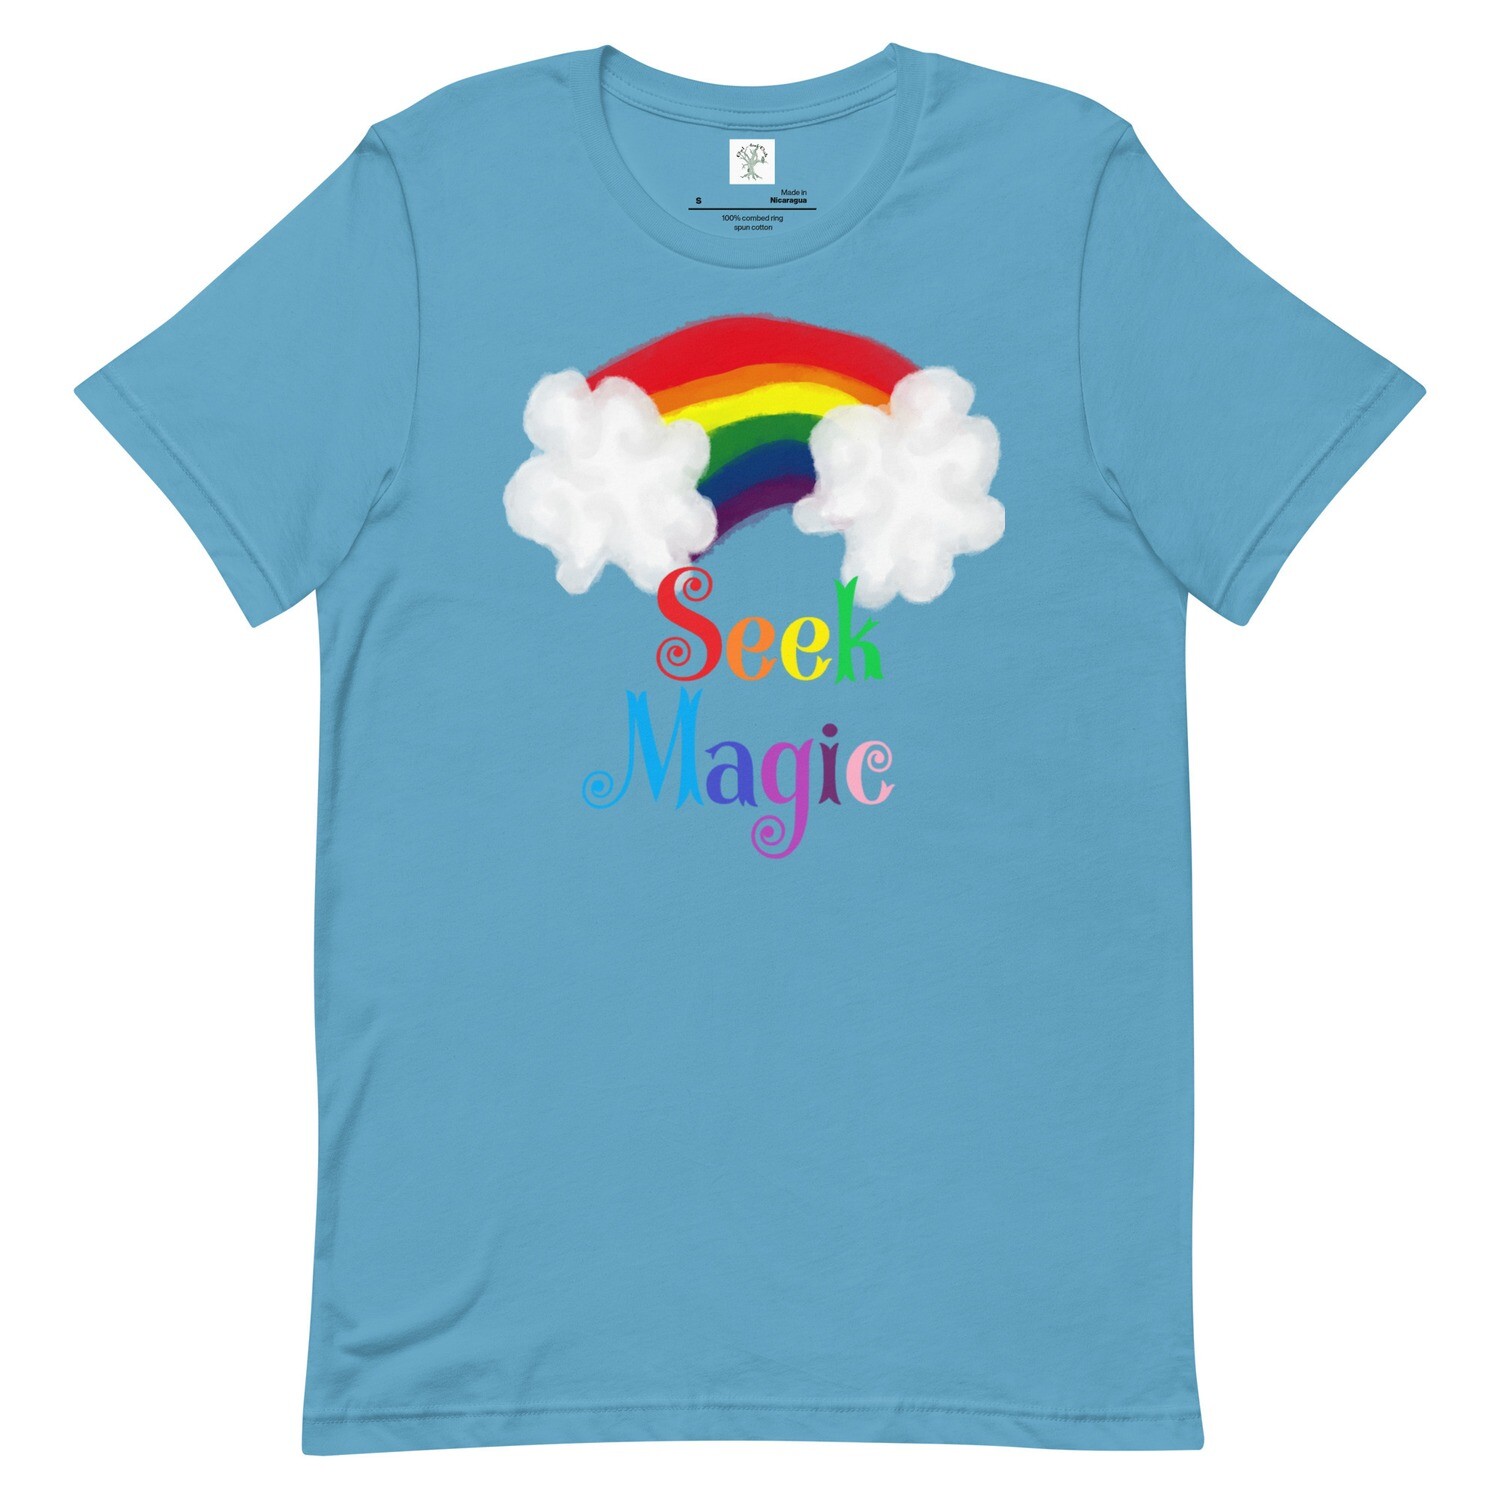 Seek Magic rainbow t-shirt